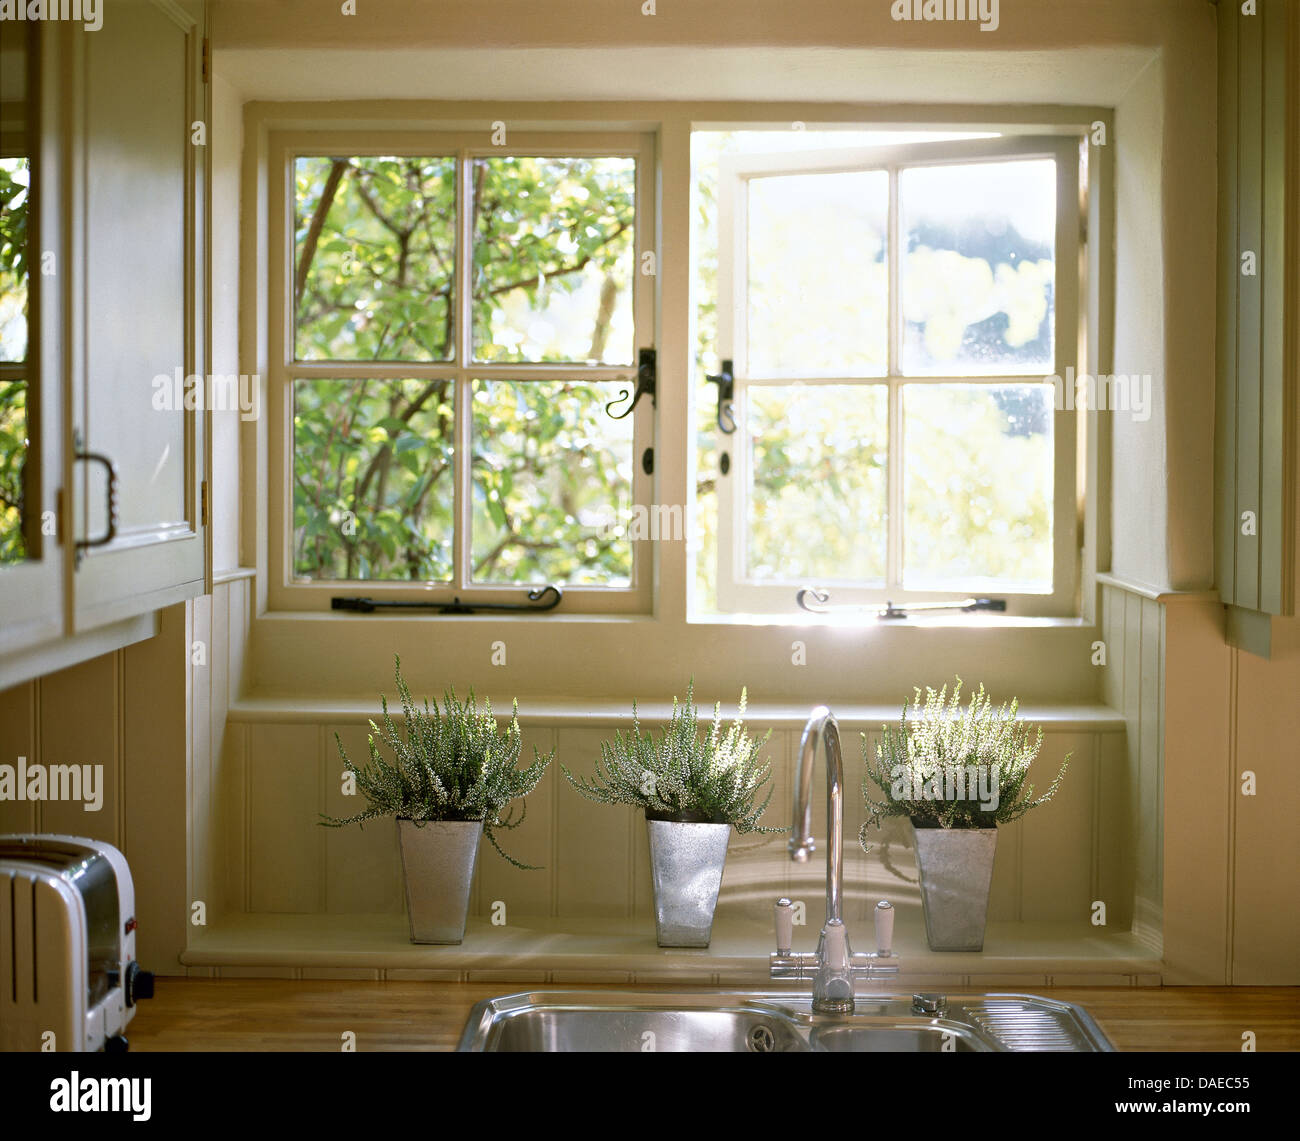 White heather in steel pots below open casement window above kitchen sink Stock Photo